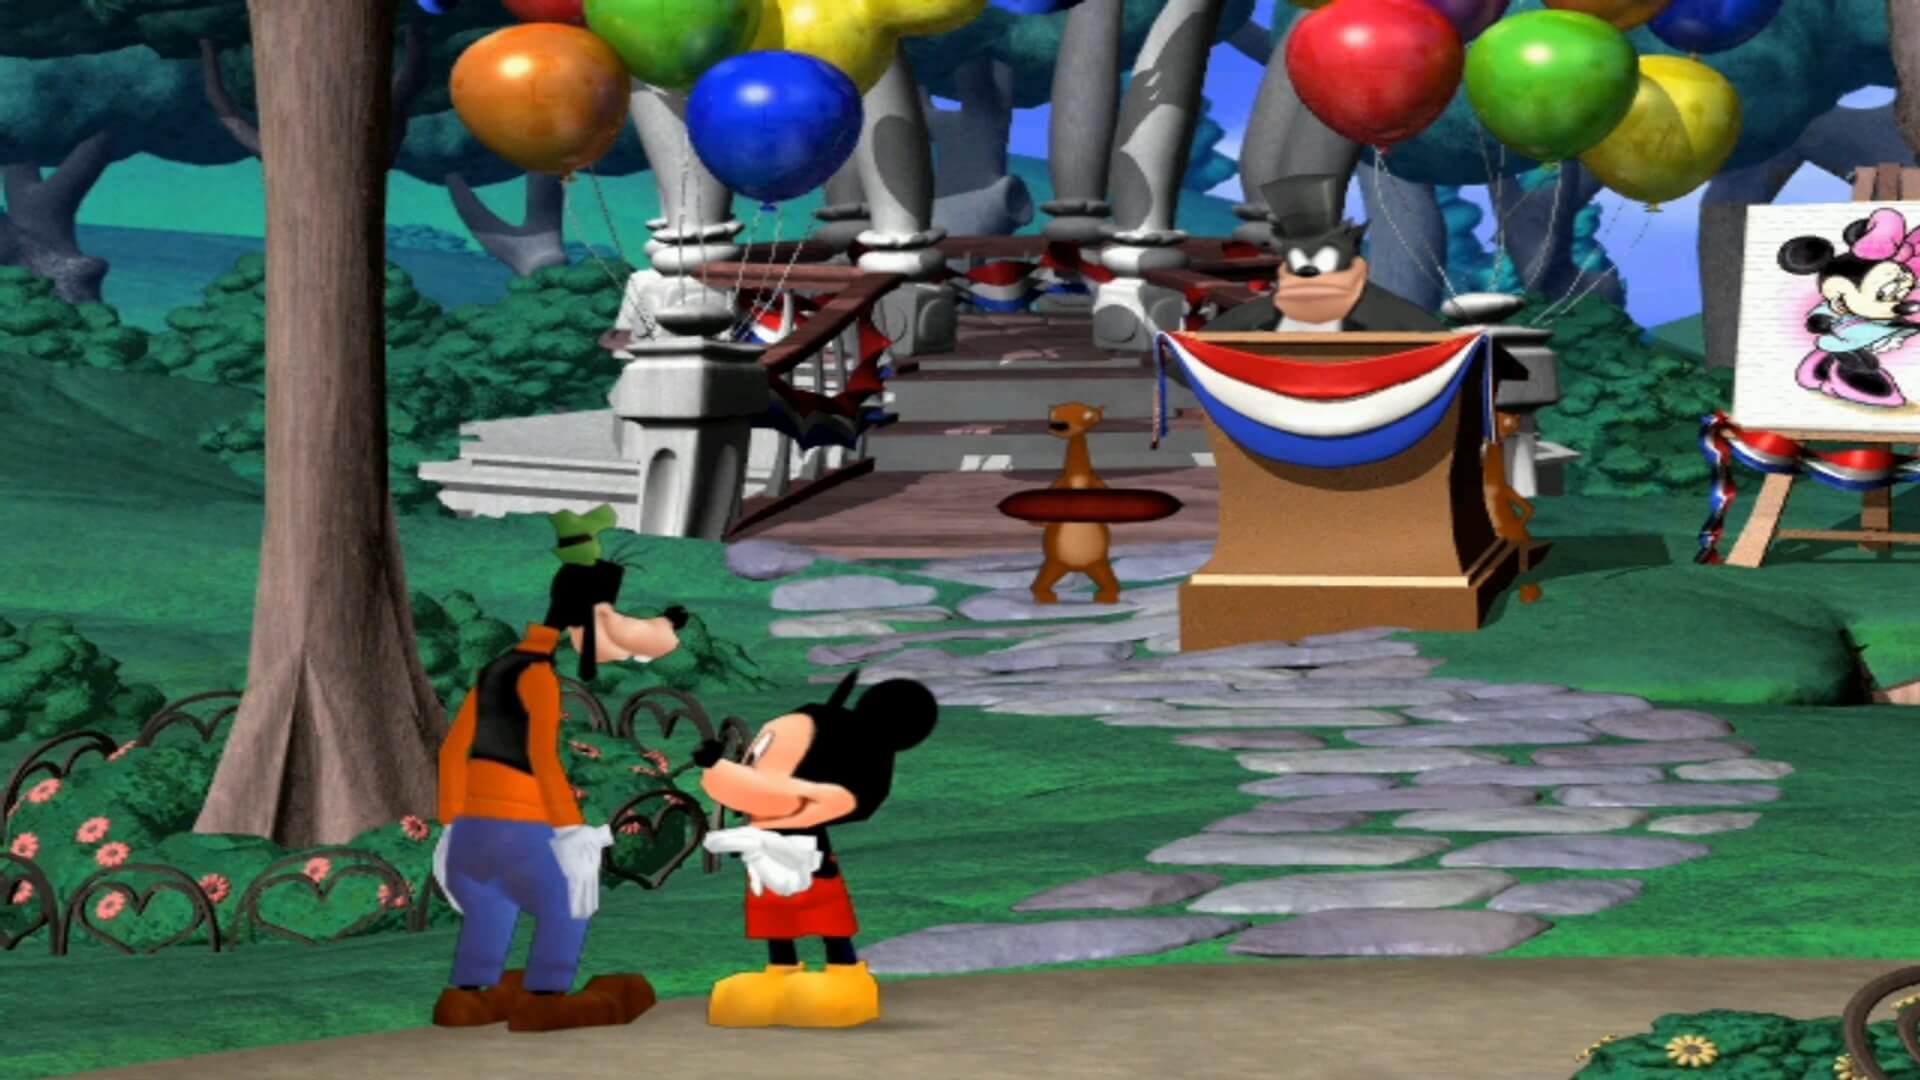 Disney's Mickey Saves the Day 3D Adventure - геймплей игры Windows